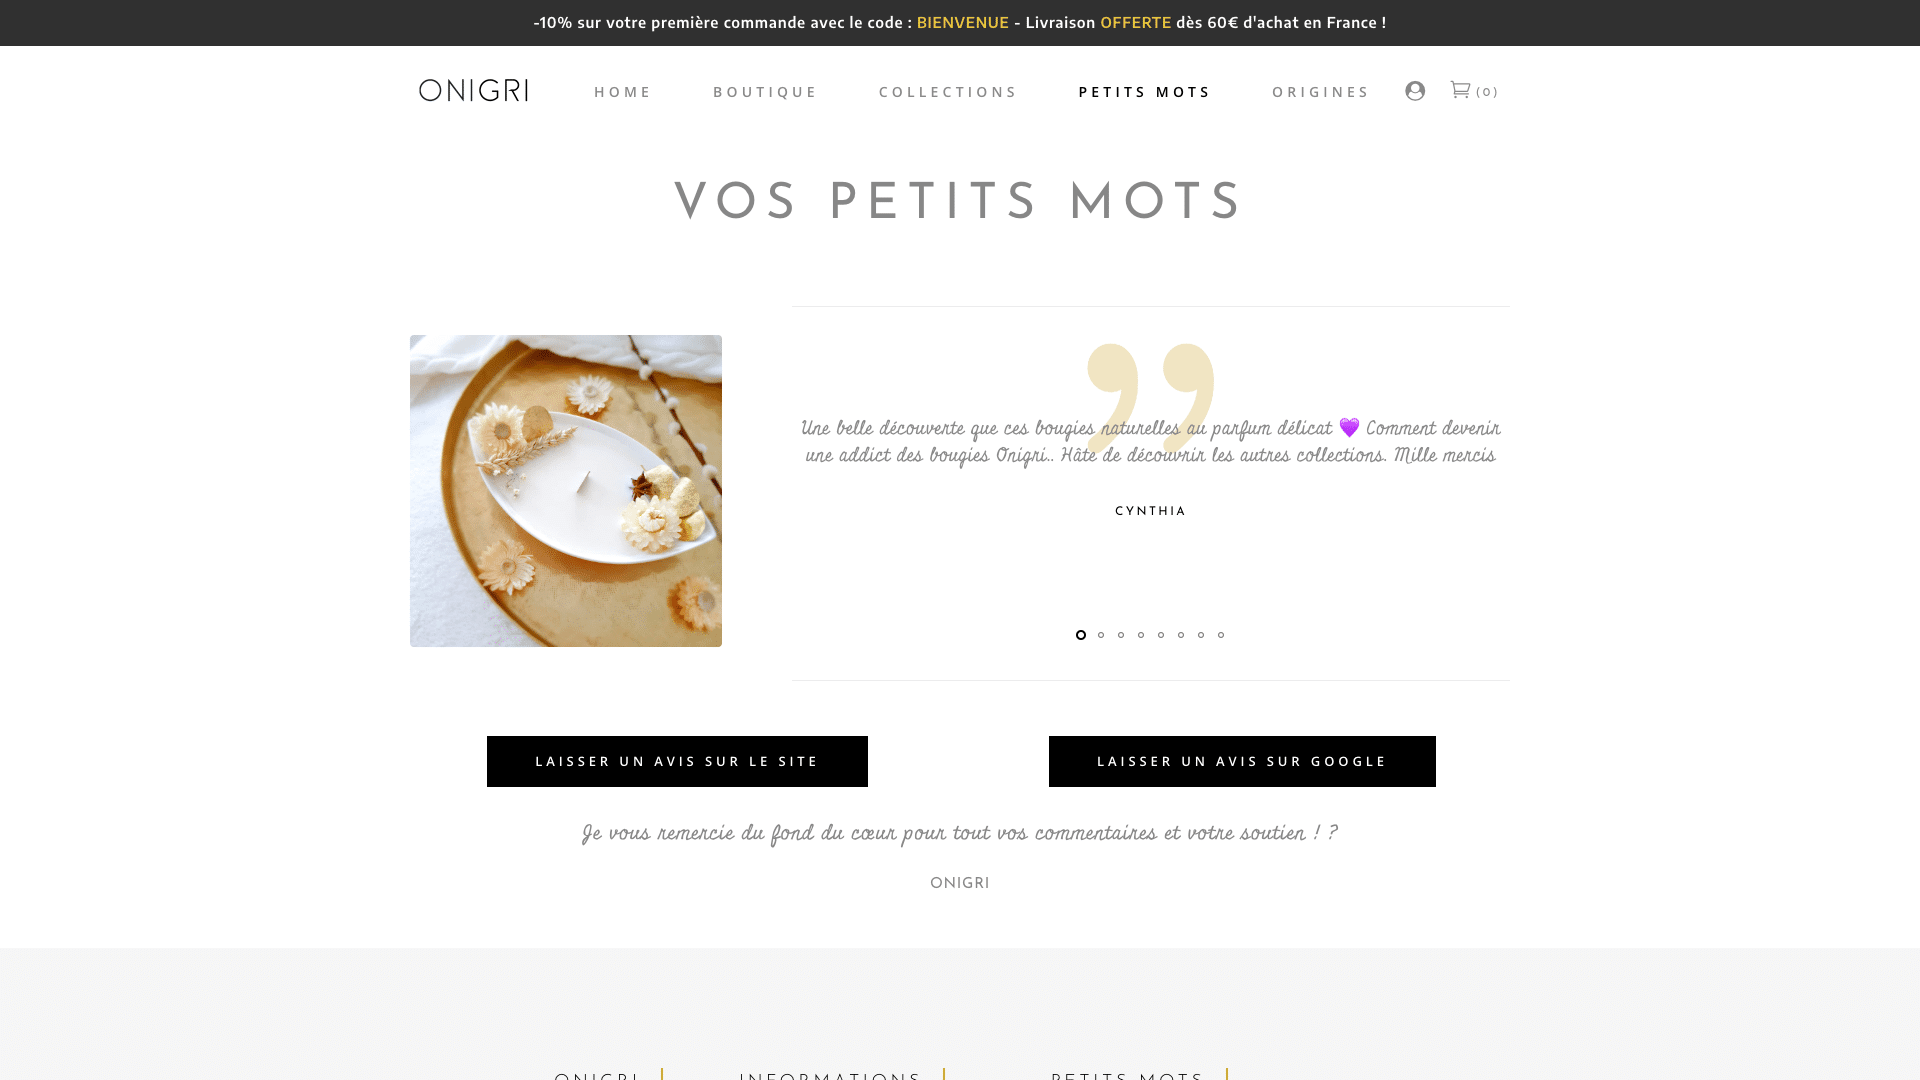 www.onigri.com_vos-petits-mots_MAC